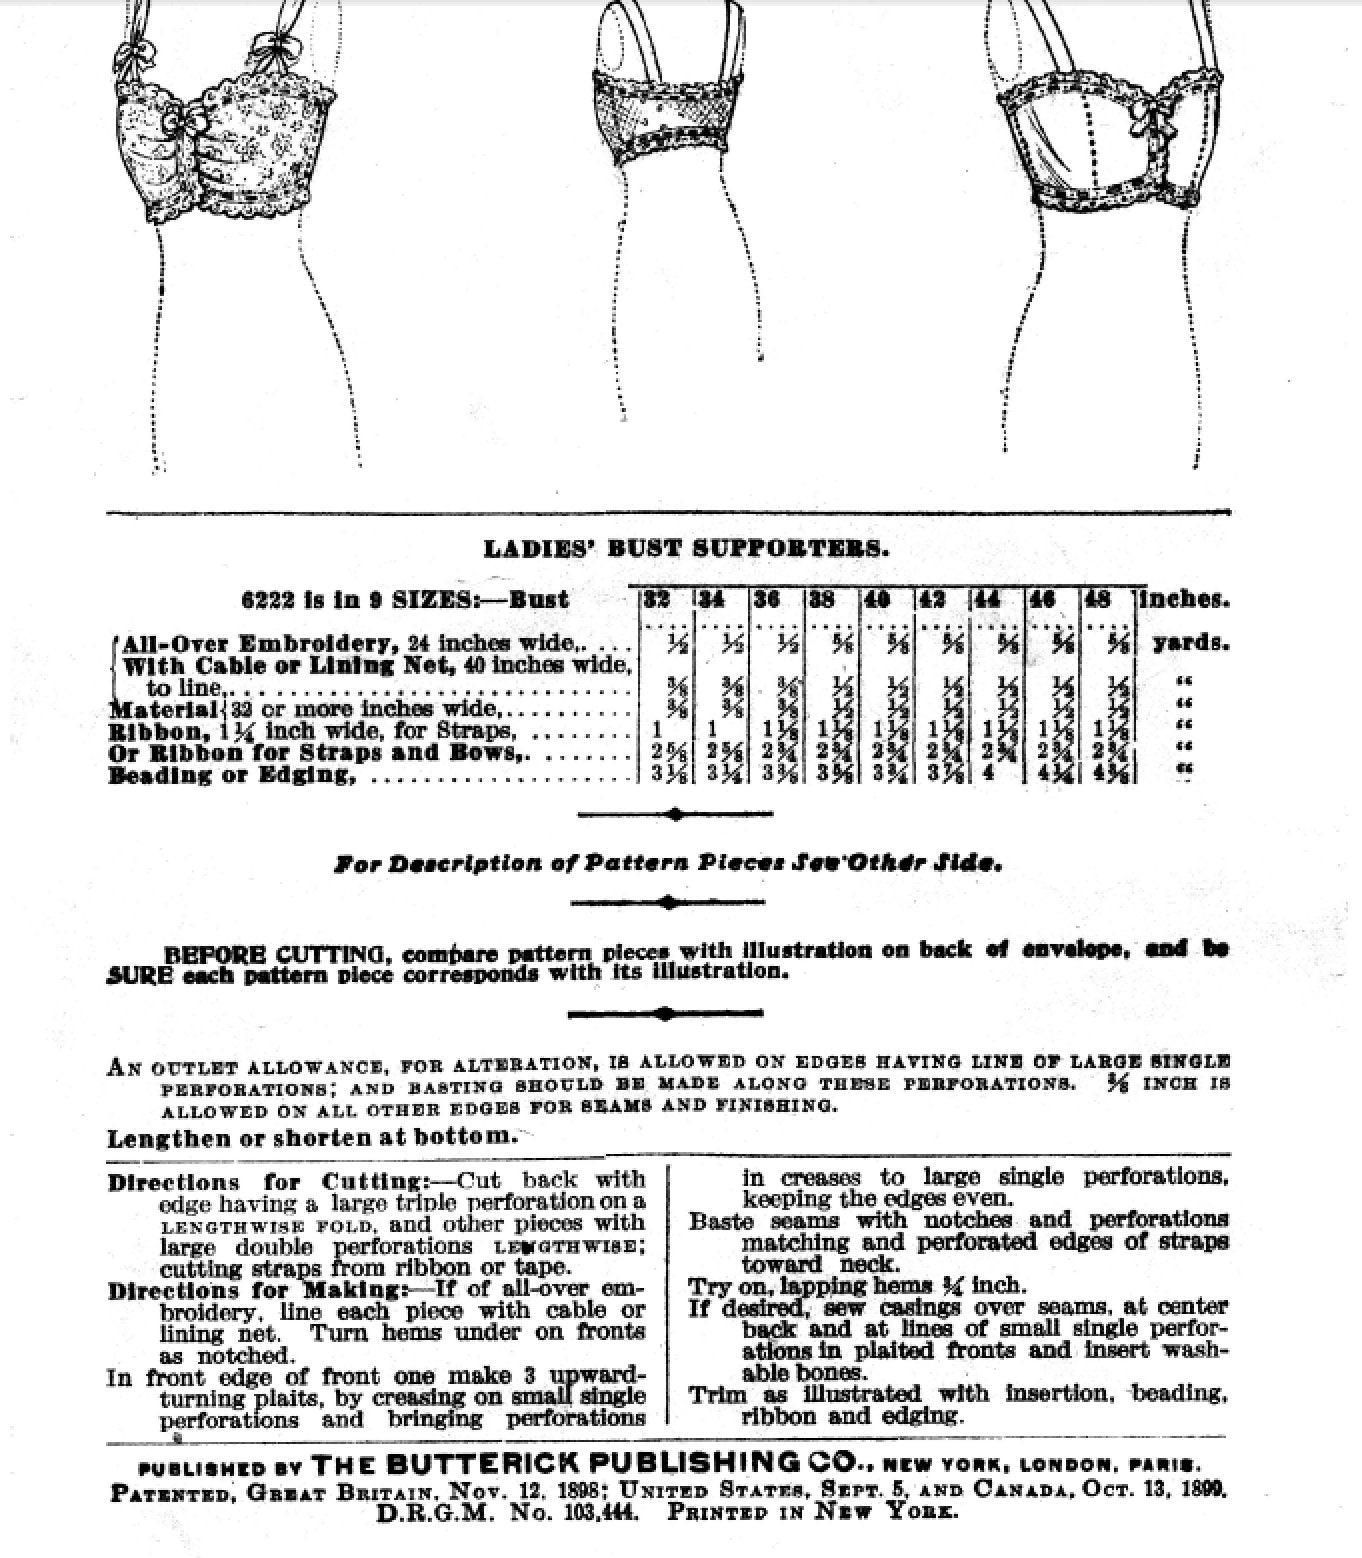 Textile Era: Different Parts of a Bra/Brassiere